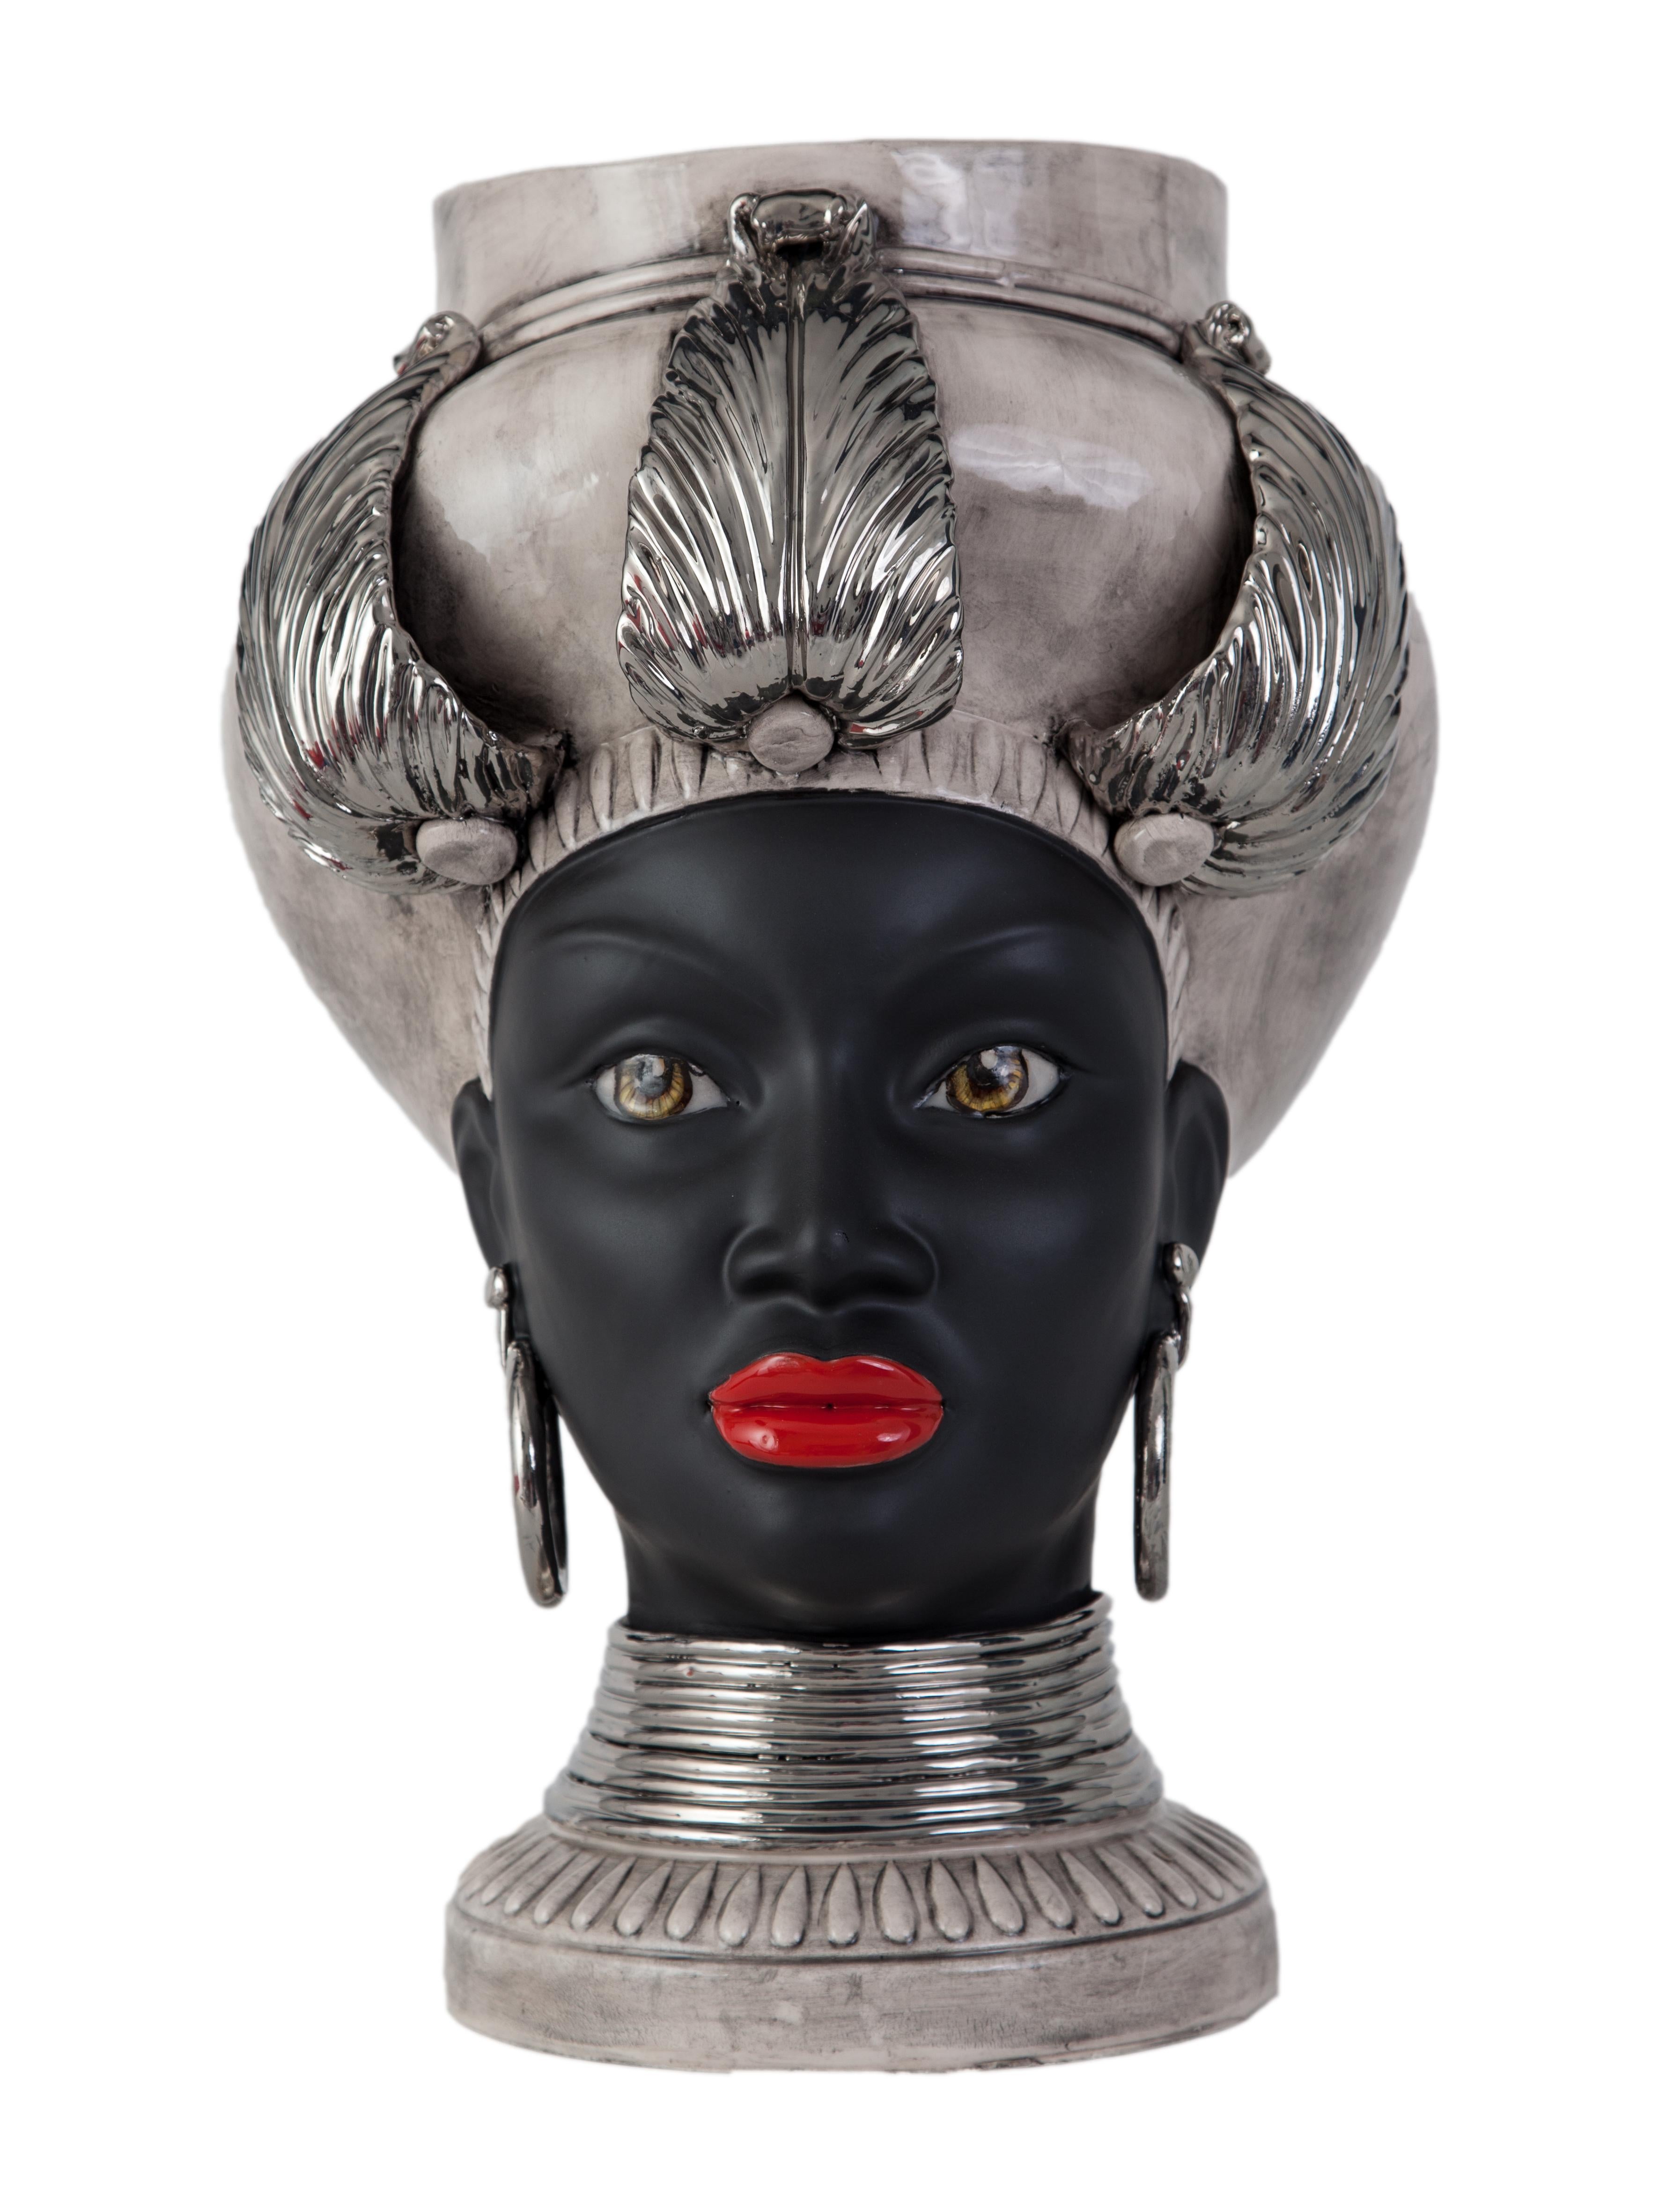 Iside I21, Man's Moorish Head, Handmade in Sicily, 2021, Golden, Size M For Sale 11